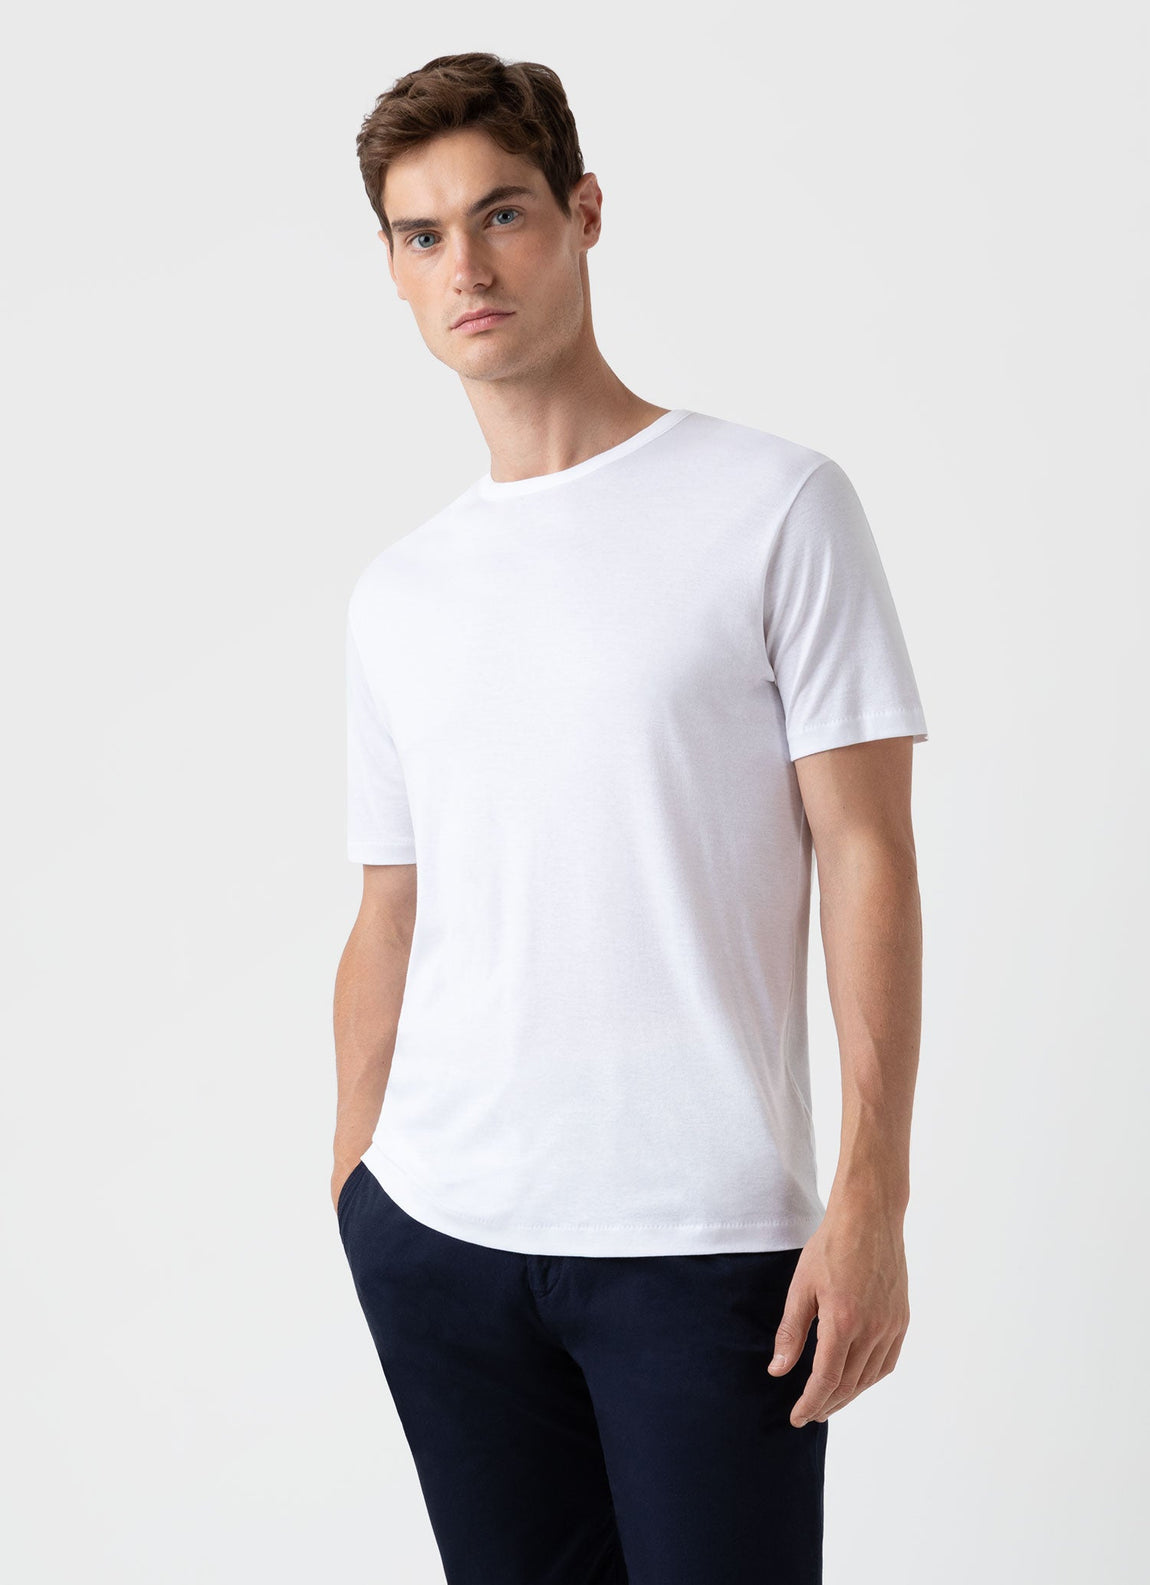 Men's Sea Island Cotton T-shirt in White | Sunspel